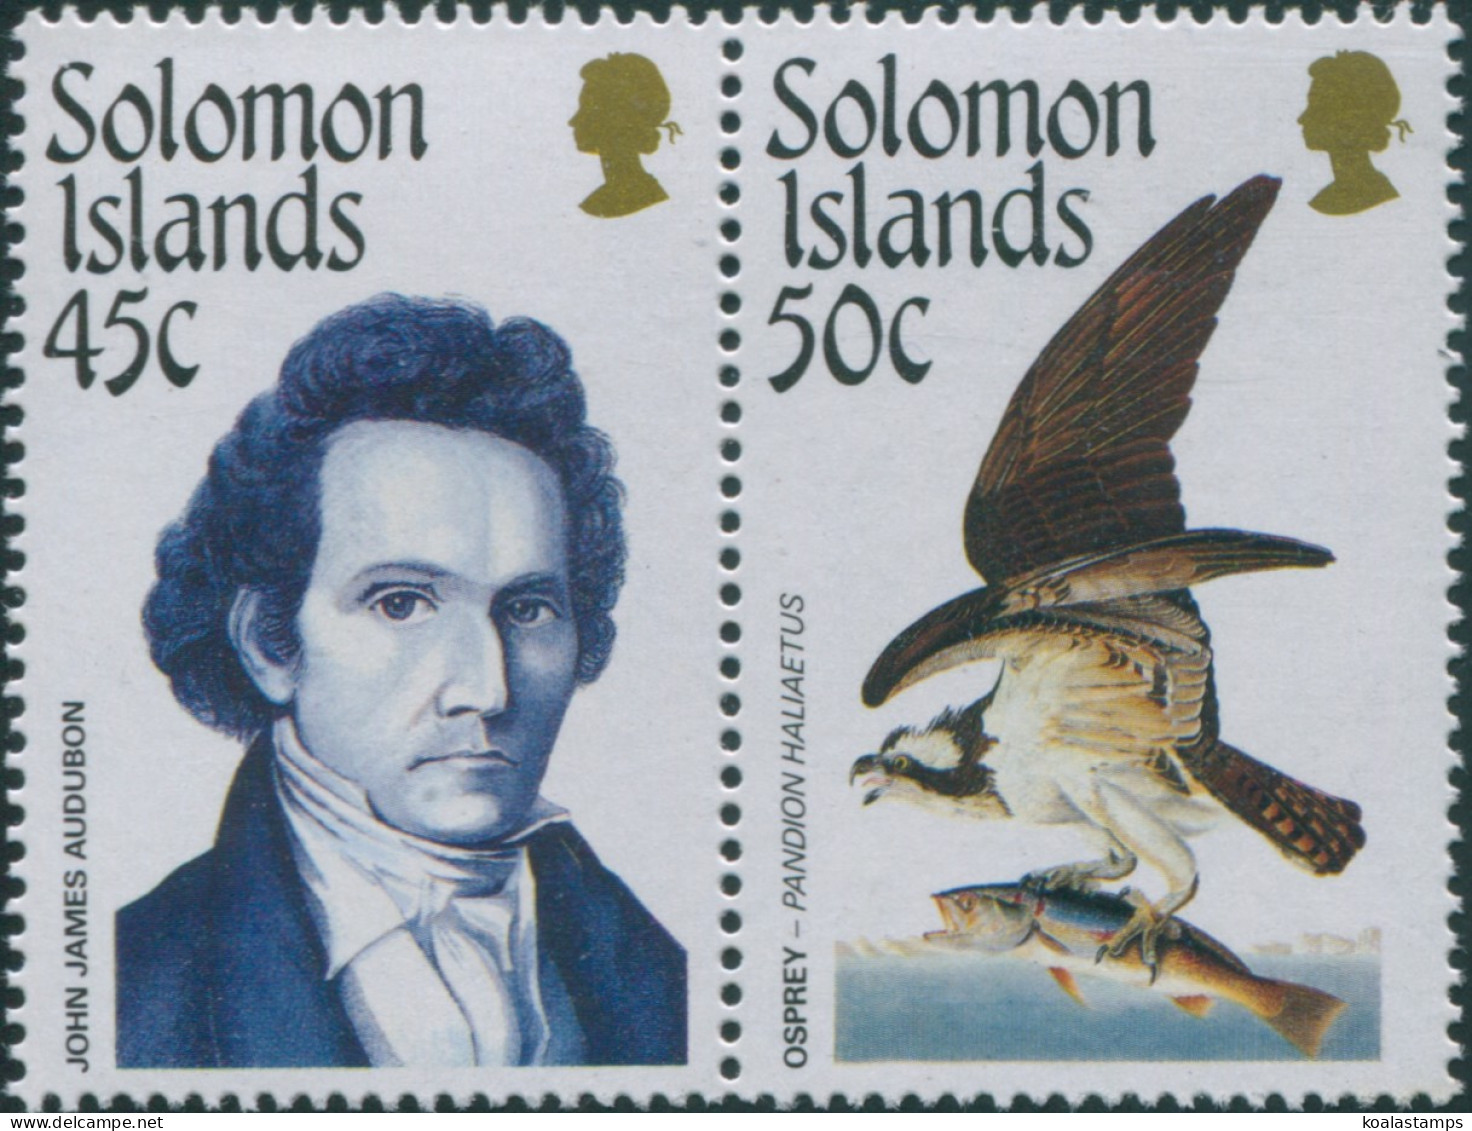 Solomon Islands 1986 SG556 Audubon Set Ex MS MNH - Salomoninseln (Salomonen 1978-...)